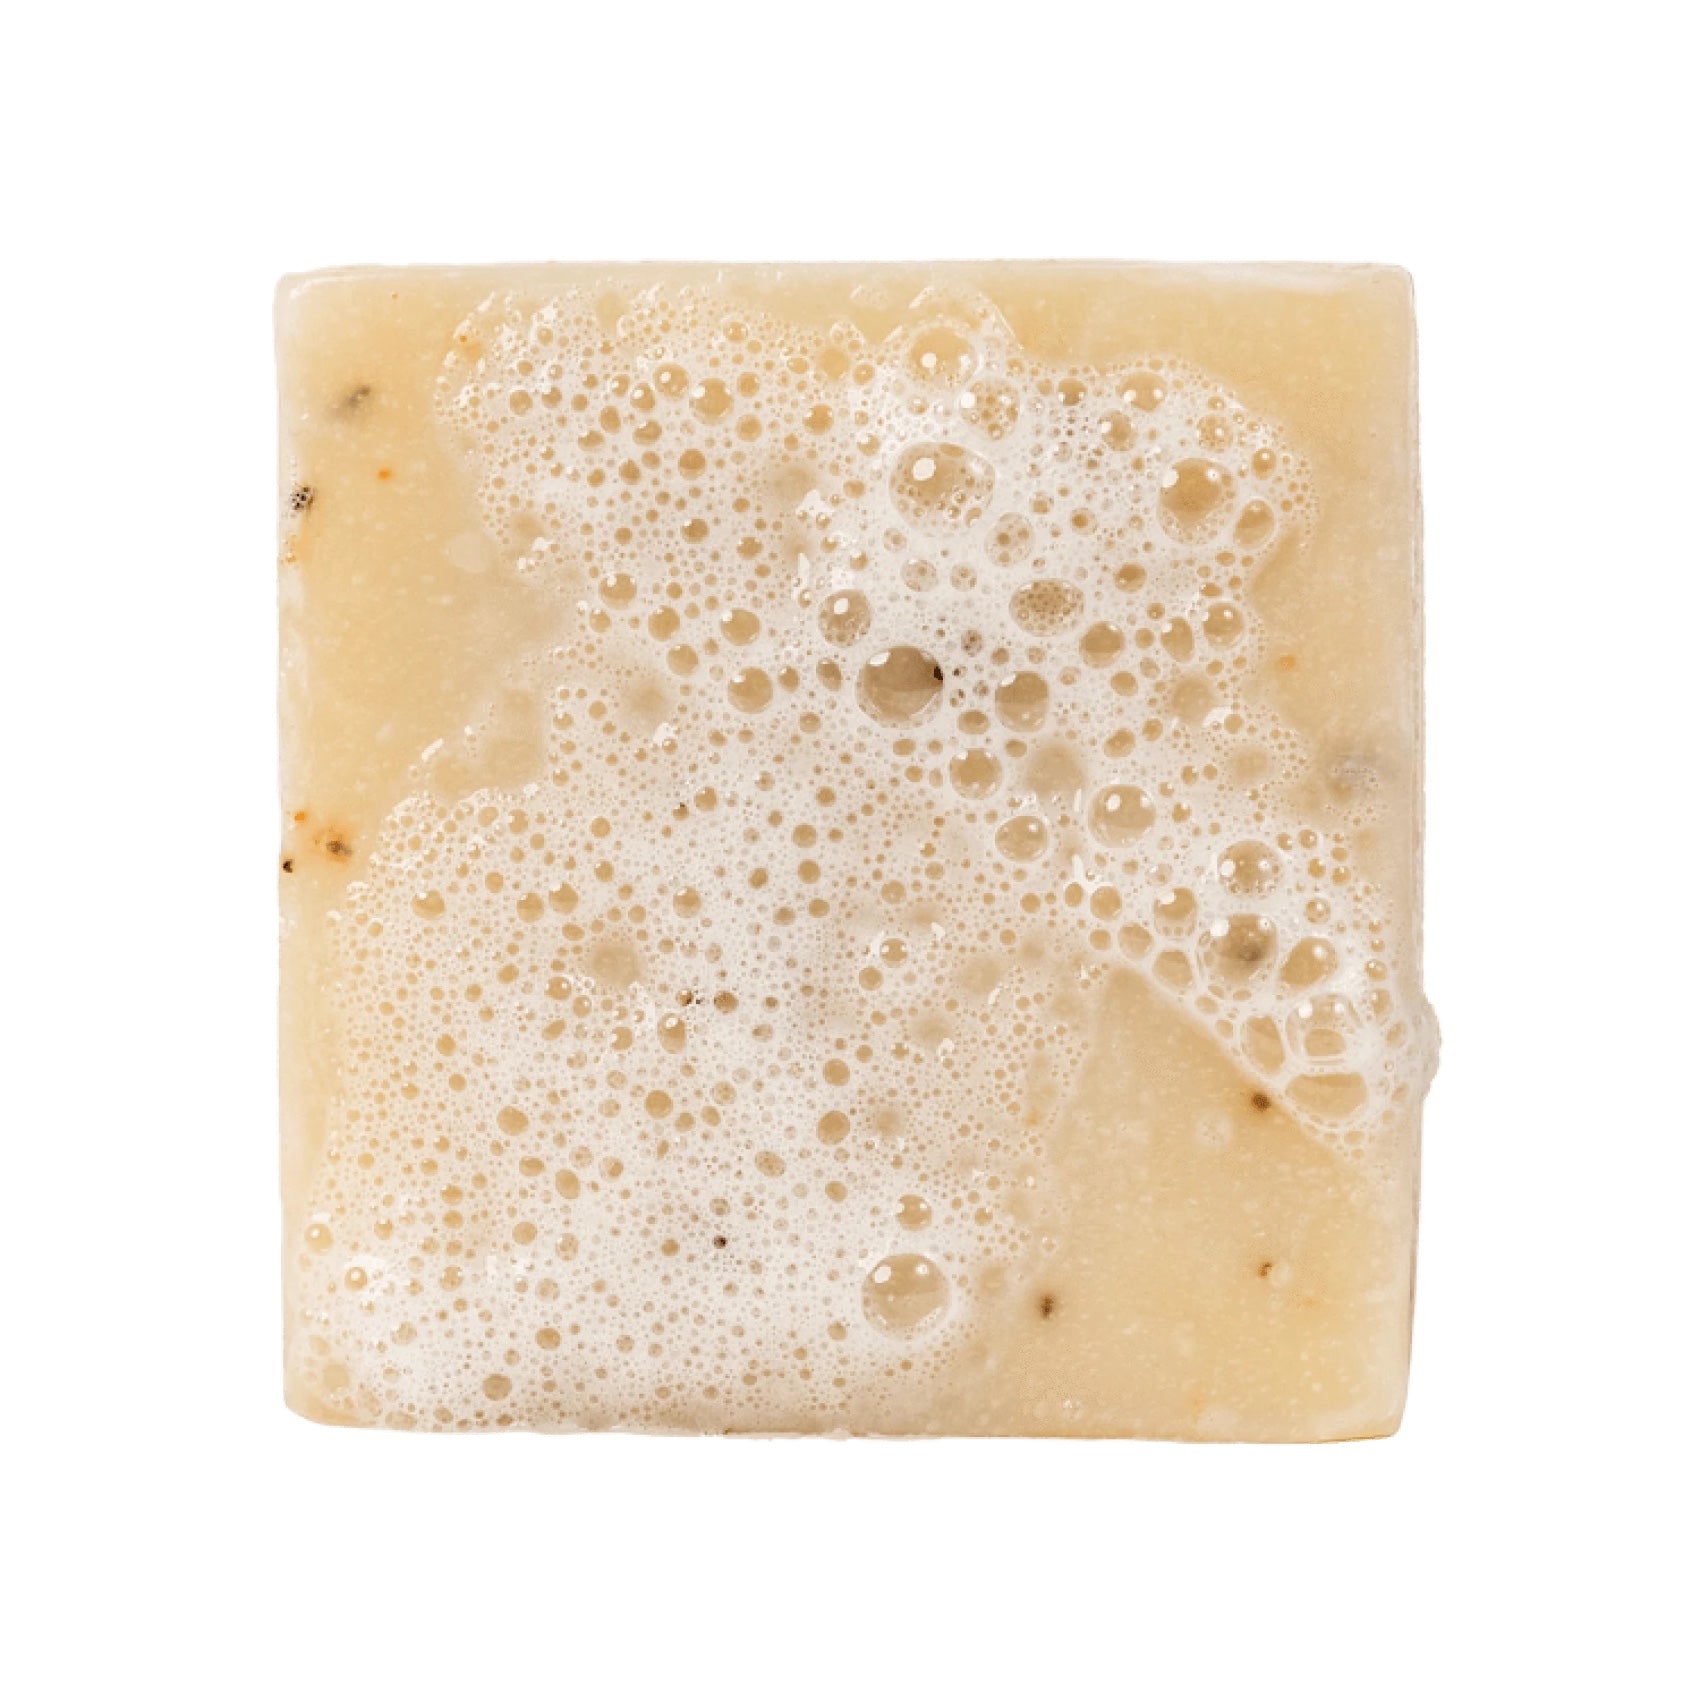 Dr. Squatch Mens Cedar Citrus Soap – Natural Exfoliating Soap Bar for Men  with Cedarwood, Rosemary, Orange Organic Oils – Bar Handmade in USA 